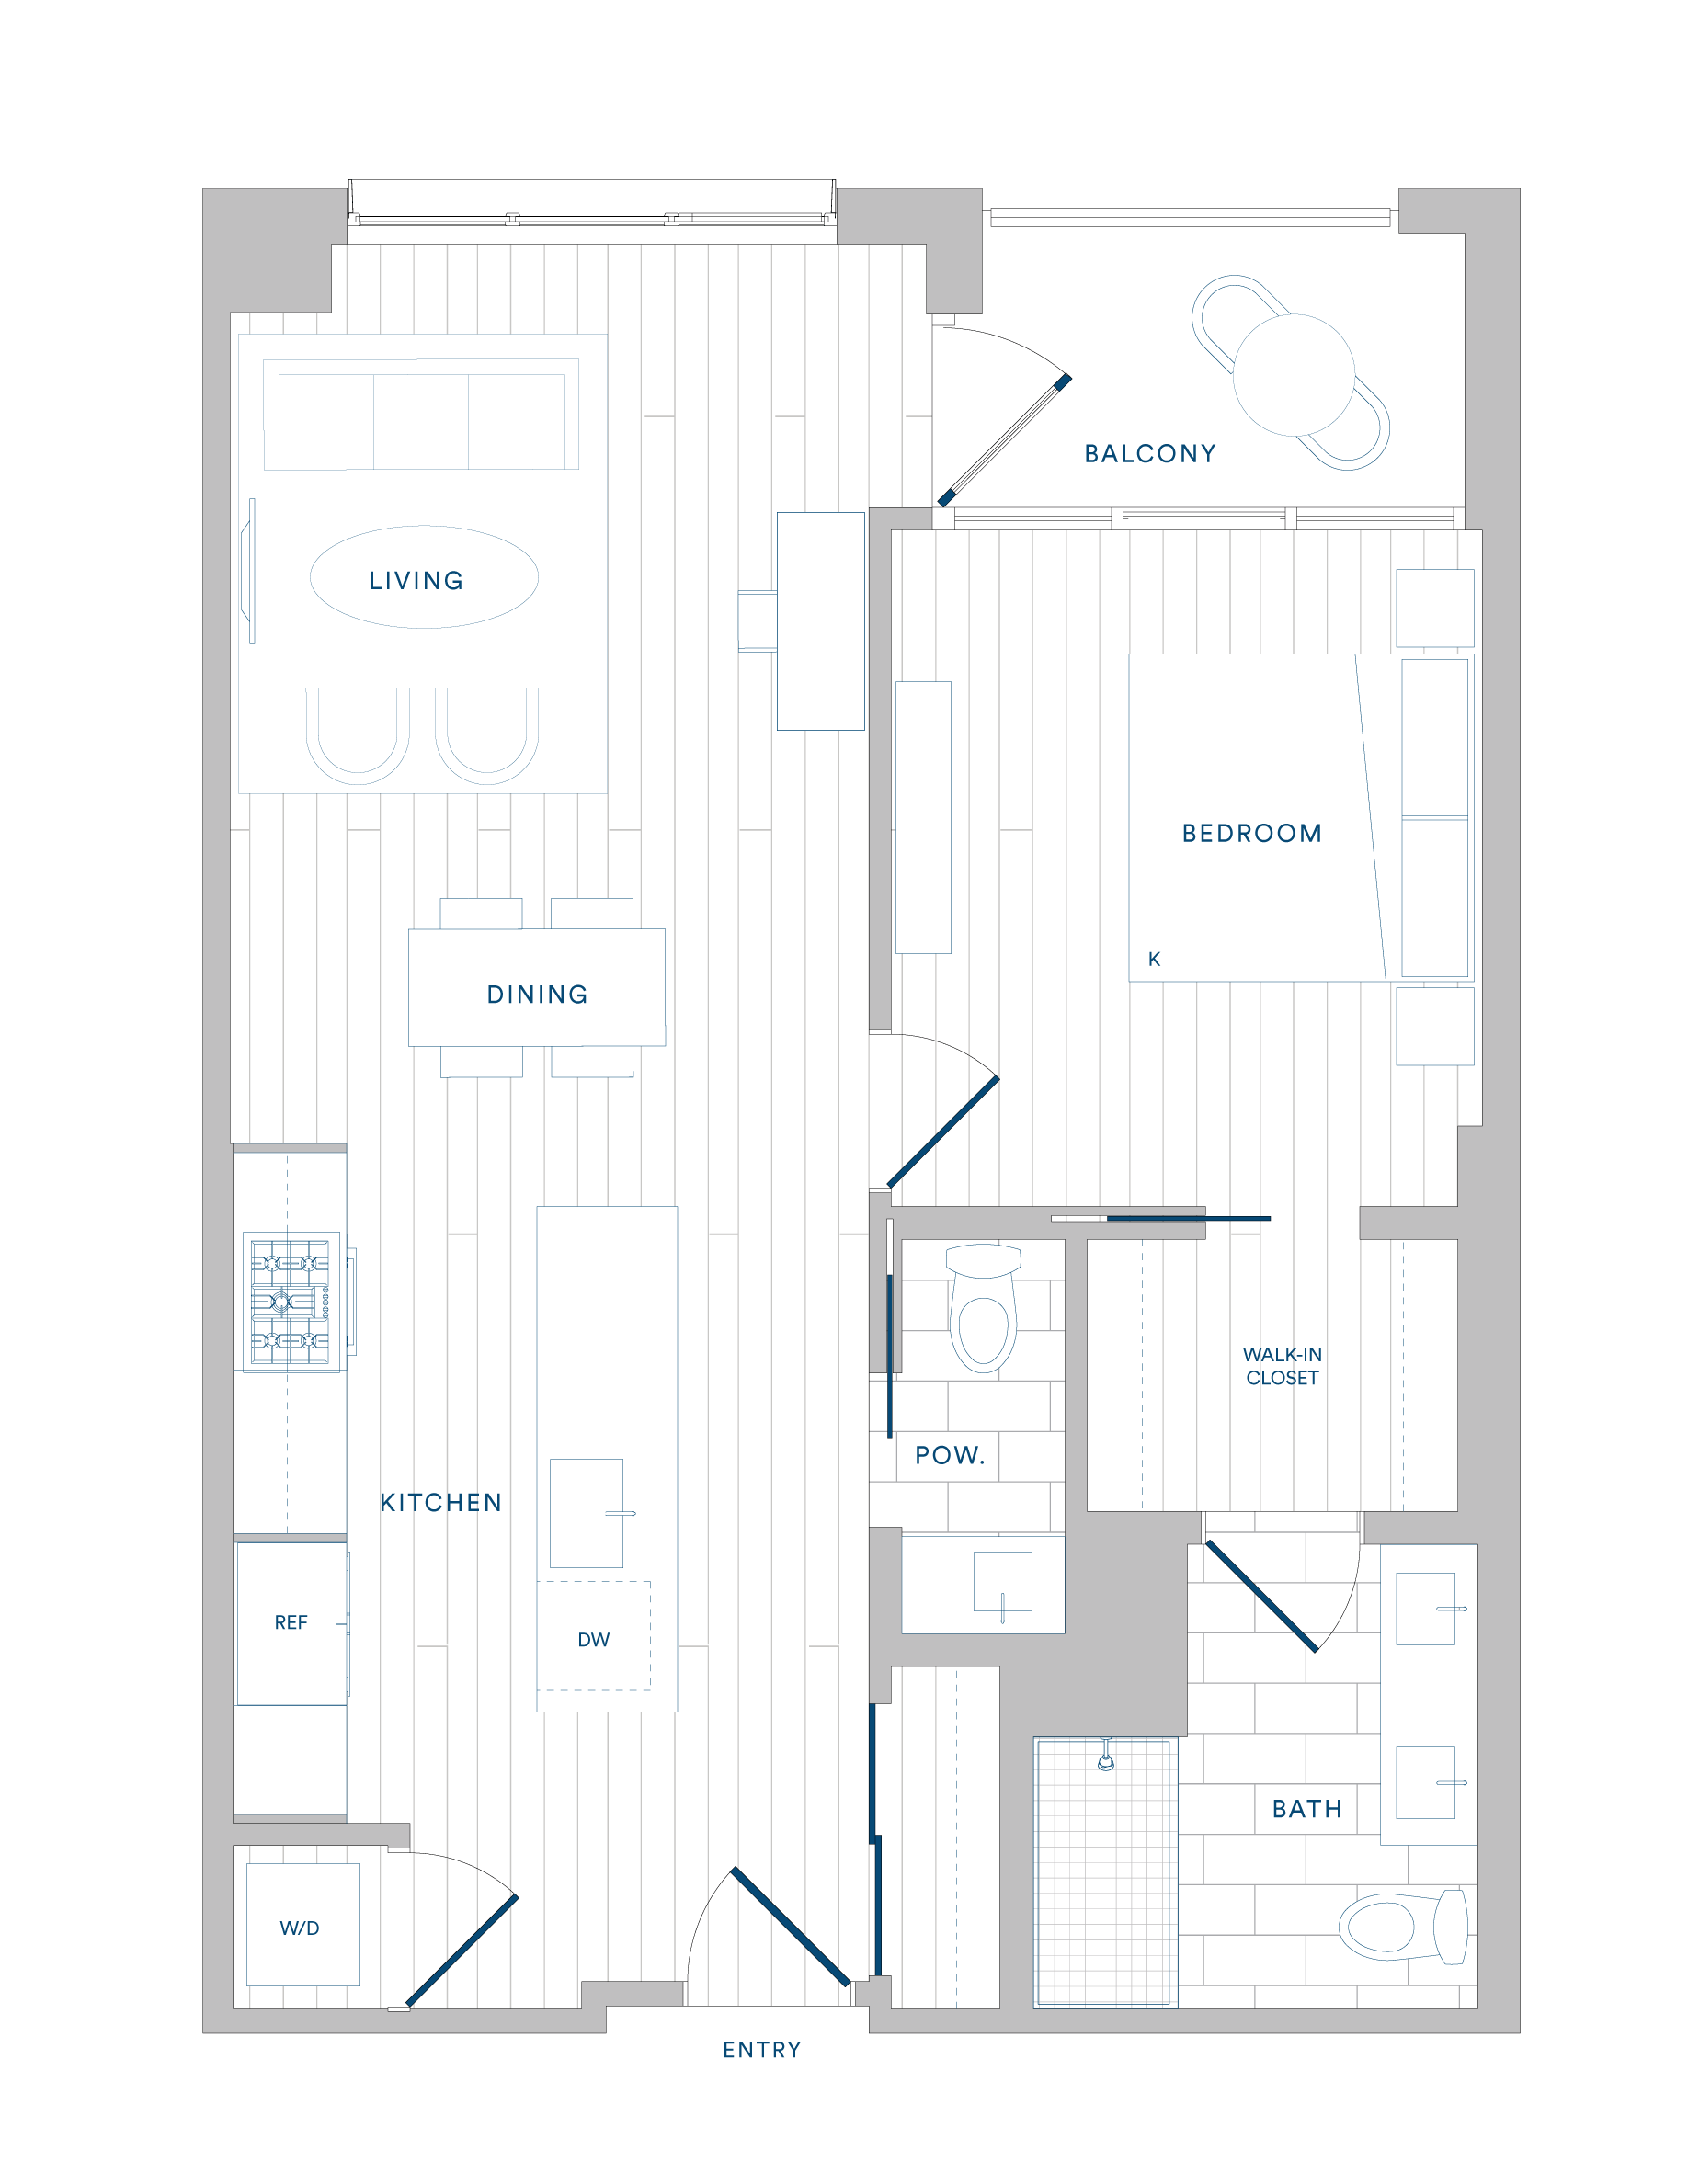 Floorplan for Apartment #1308, 1 bedroom unit at Margarite